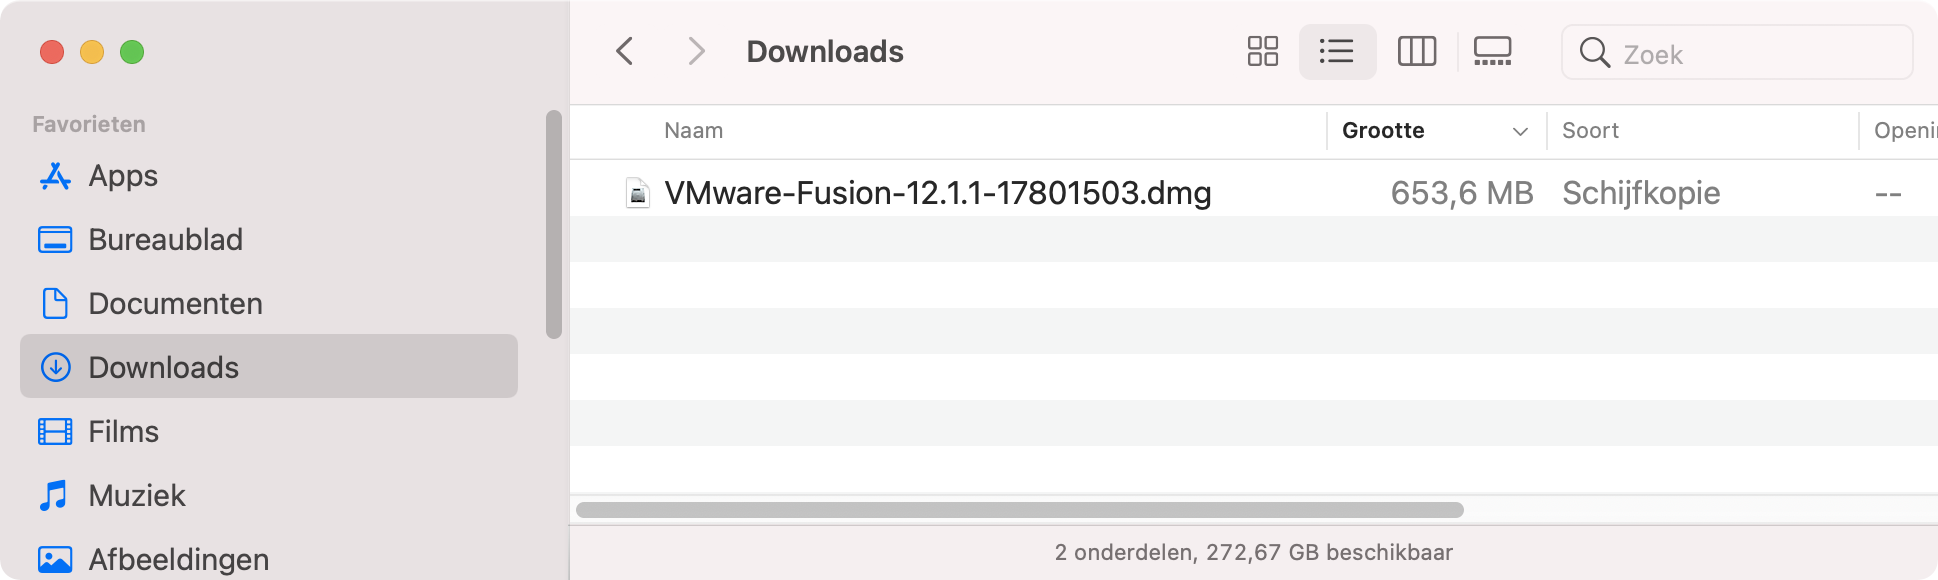 vmware fusion tutorial for mac